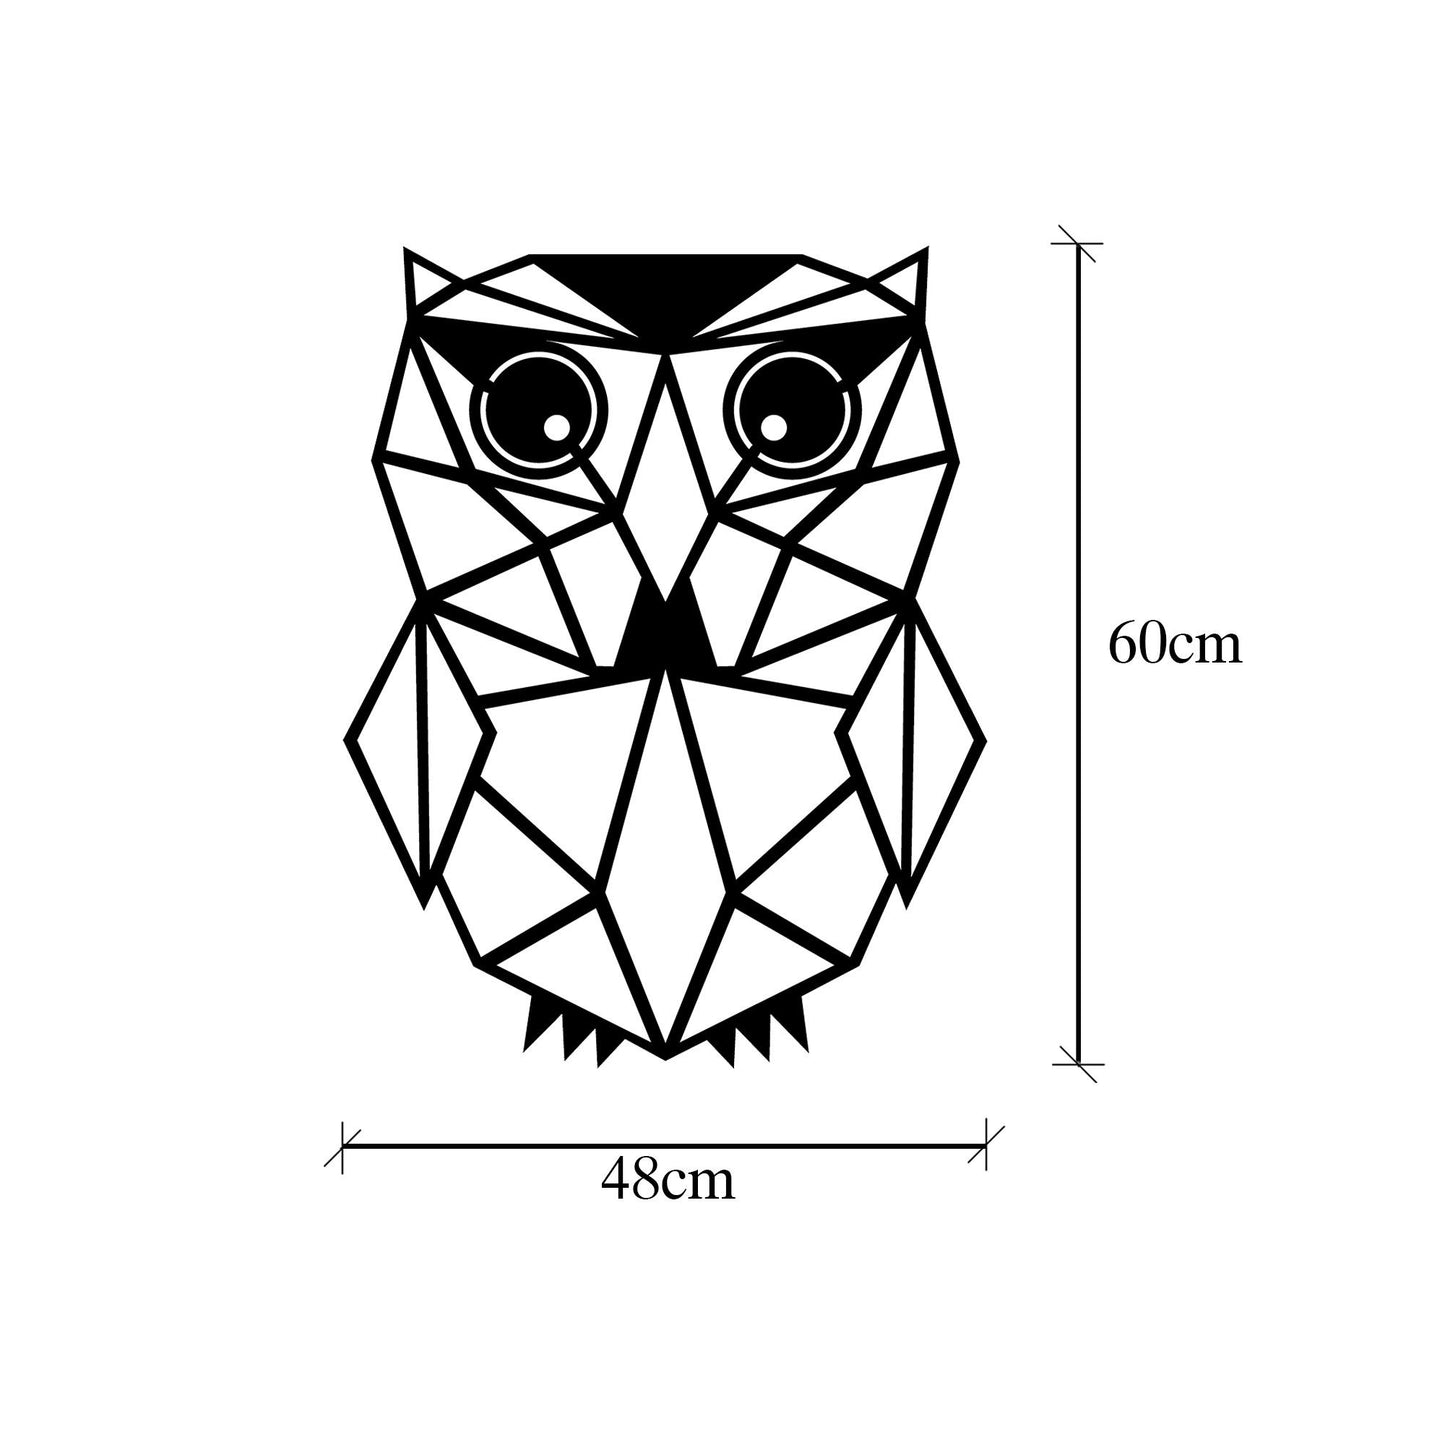 Owl 15 - Decorative Metal Wall Accessory